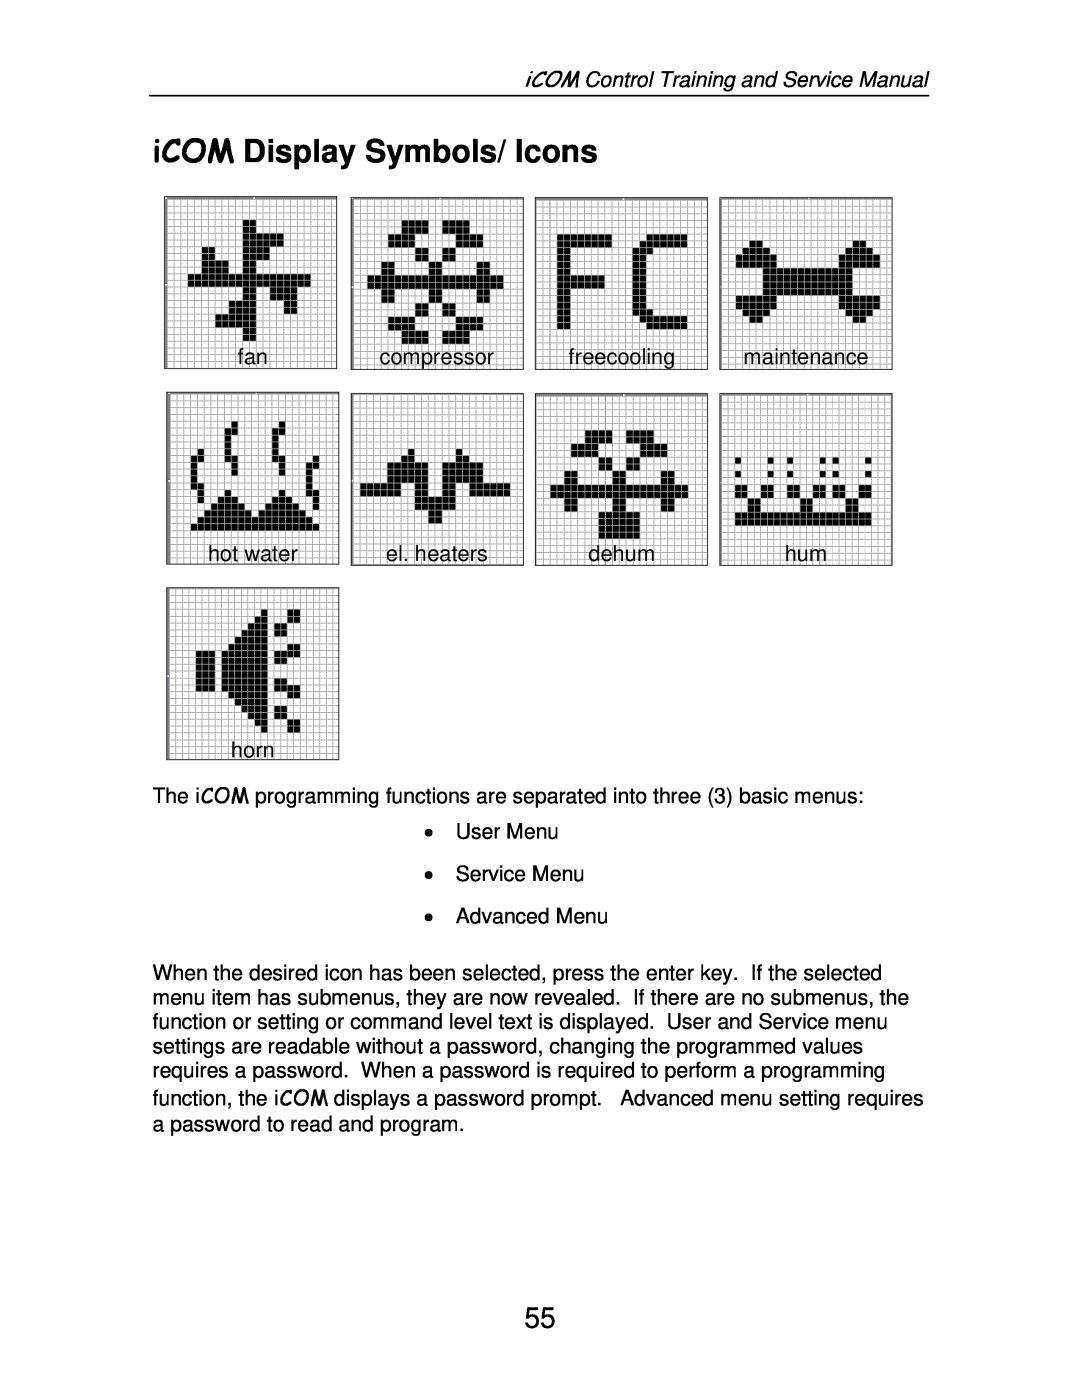 Liebert TM-10098 service manual iCOM Display Symbols/ Icons, iCOM Control Training and Service Manual 